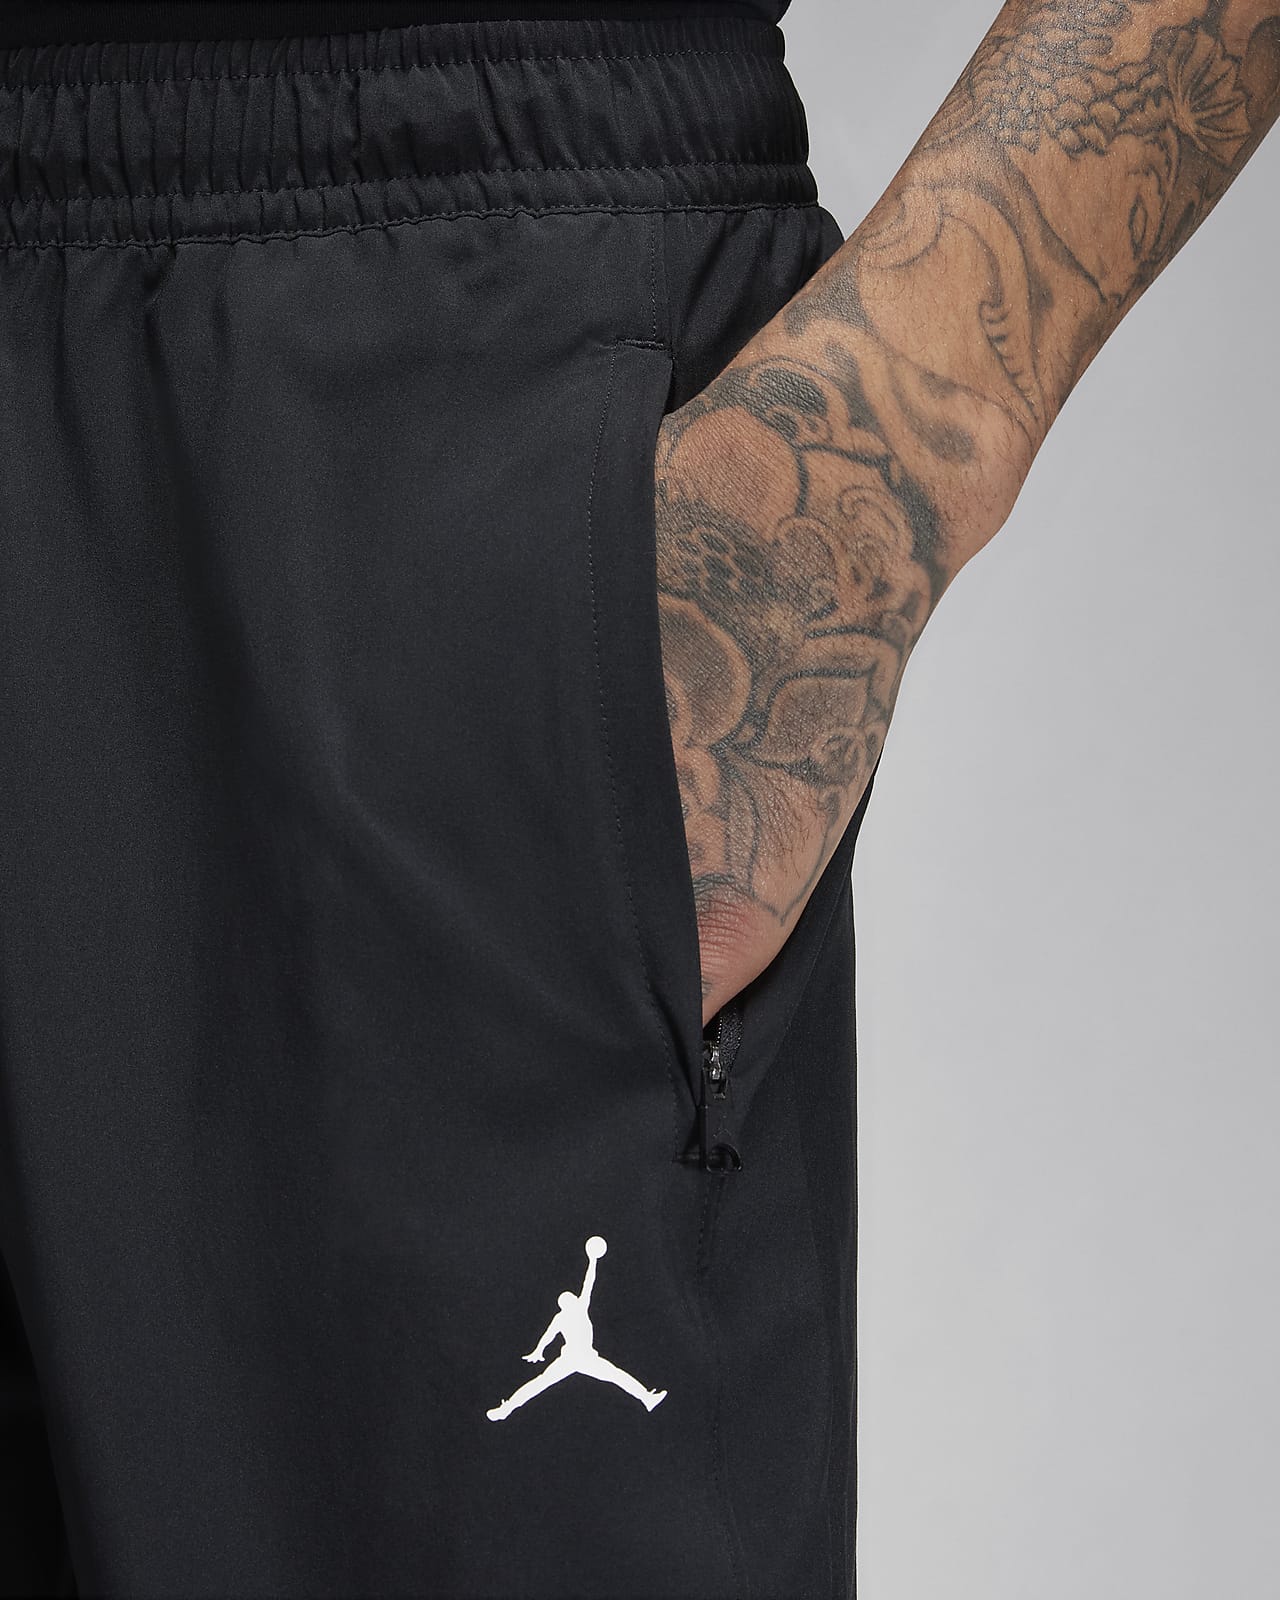 Pantalon tissé Jordan Dri-FIT Sport pour homme. Nike LU